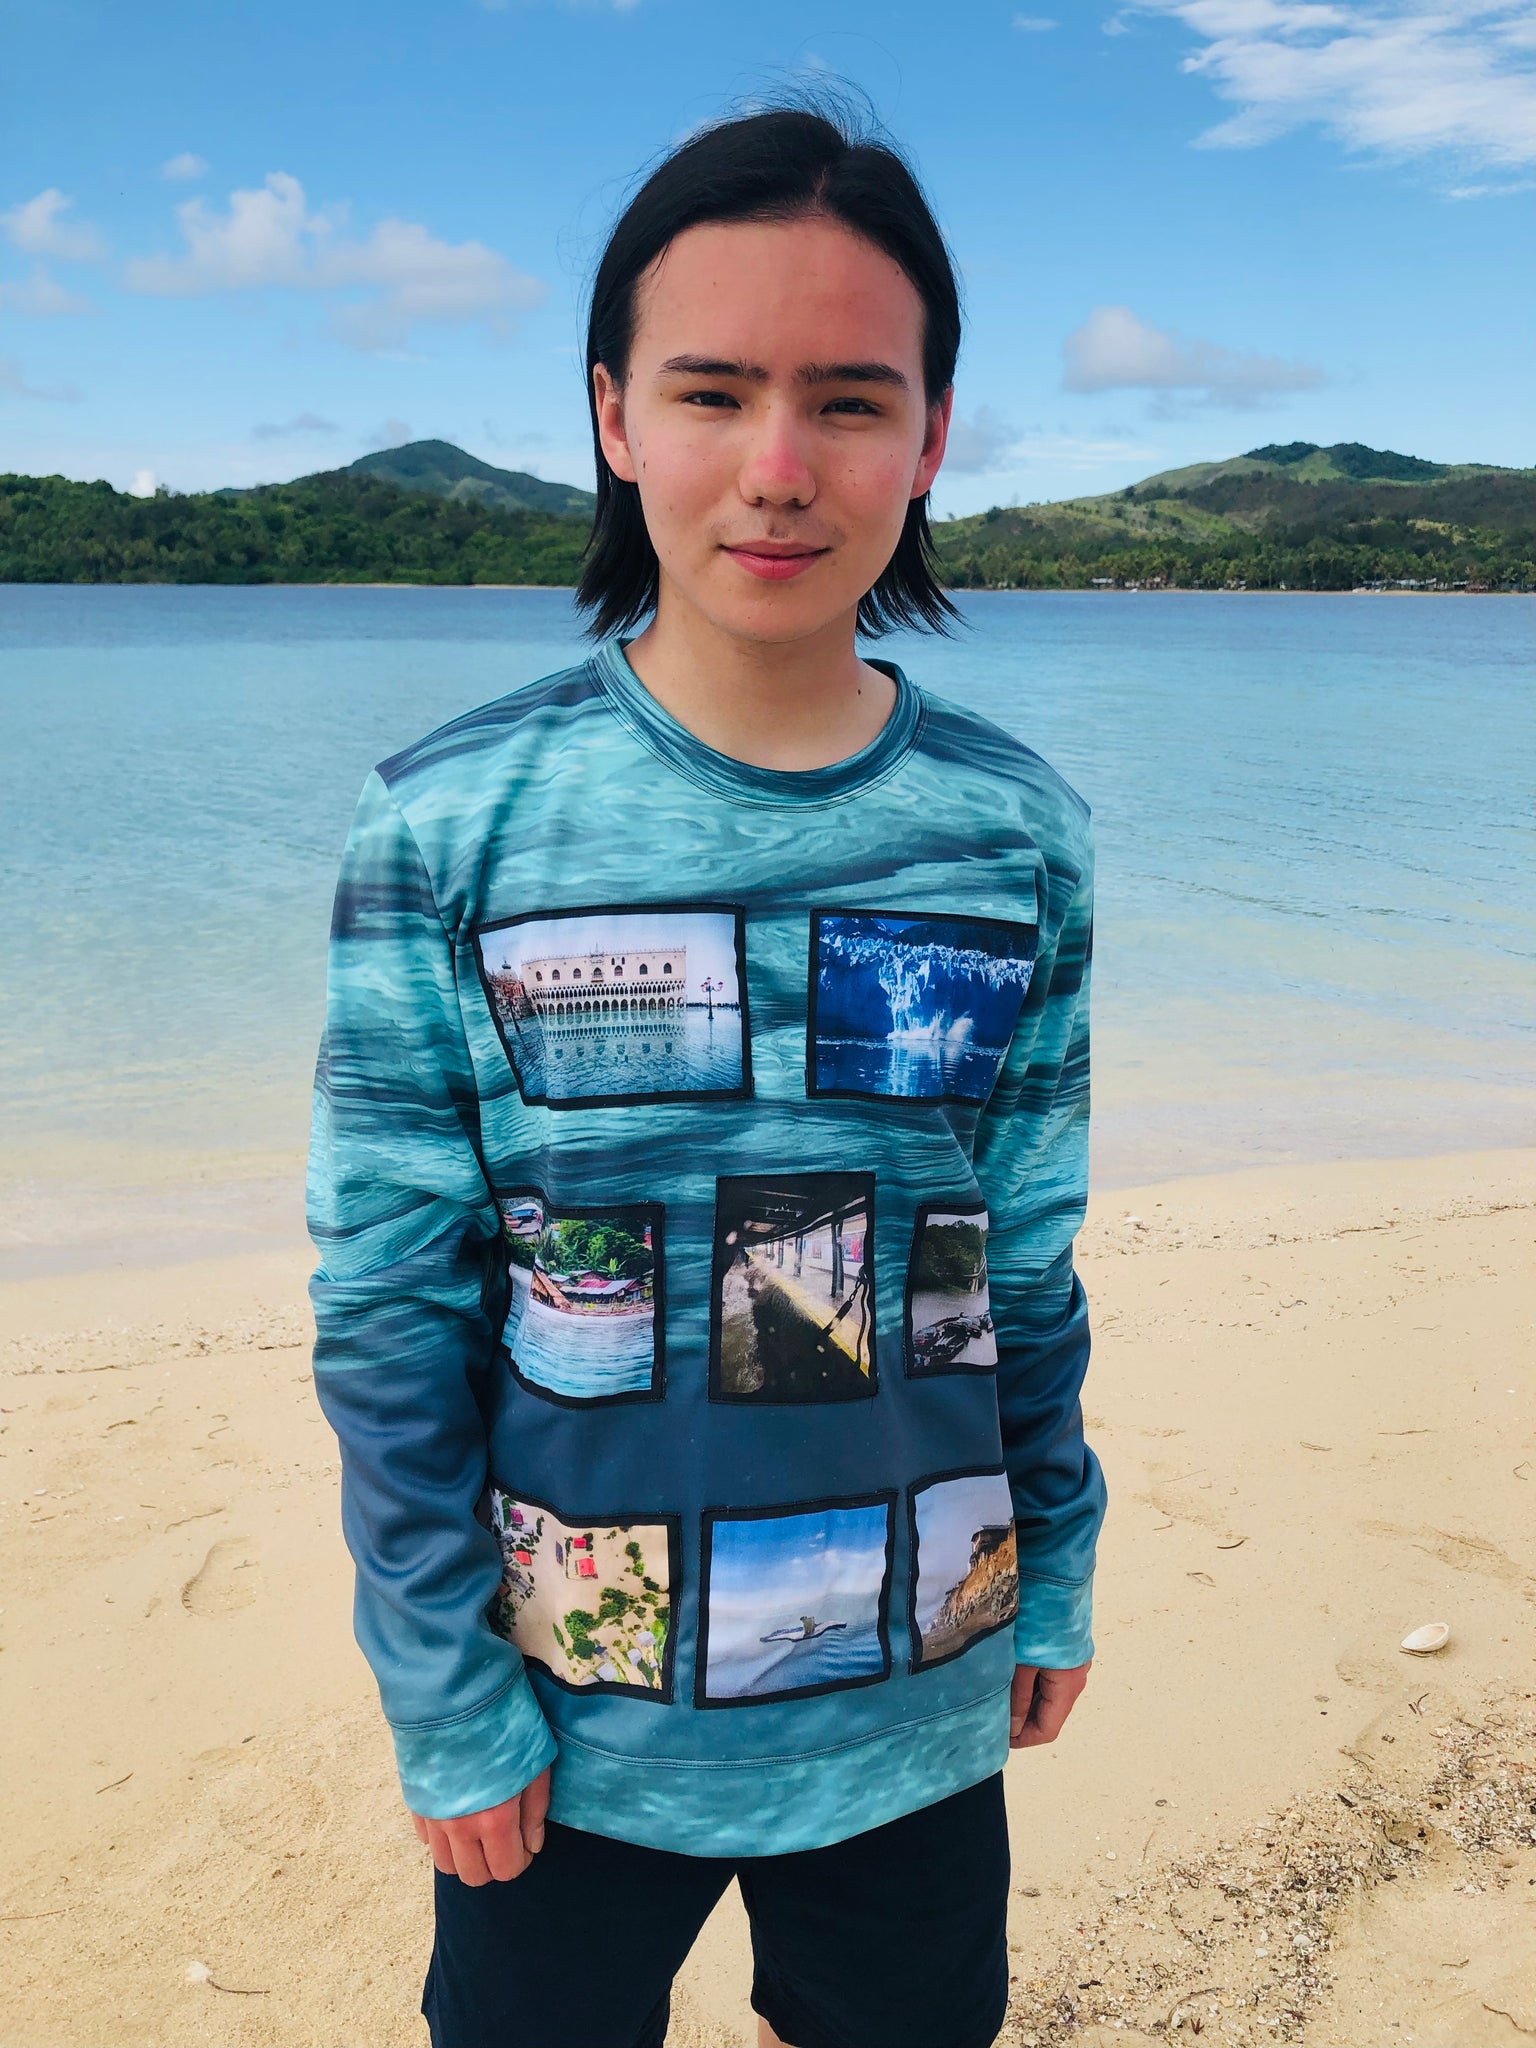 Rising Seas Sweatshirt